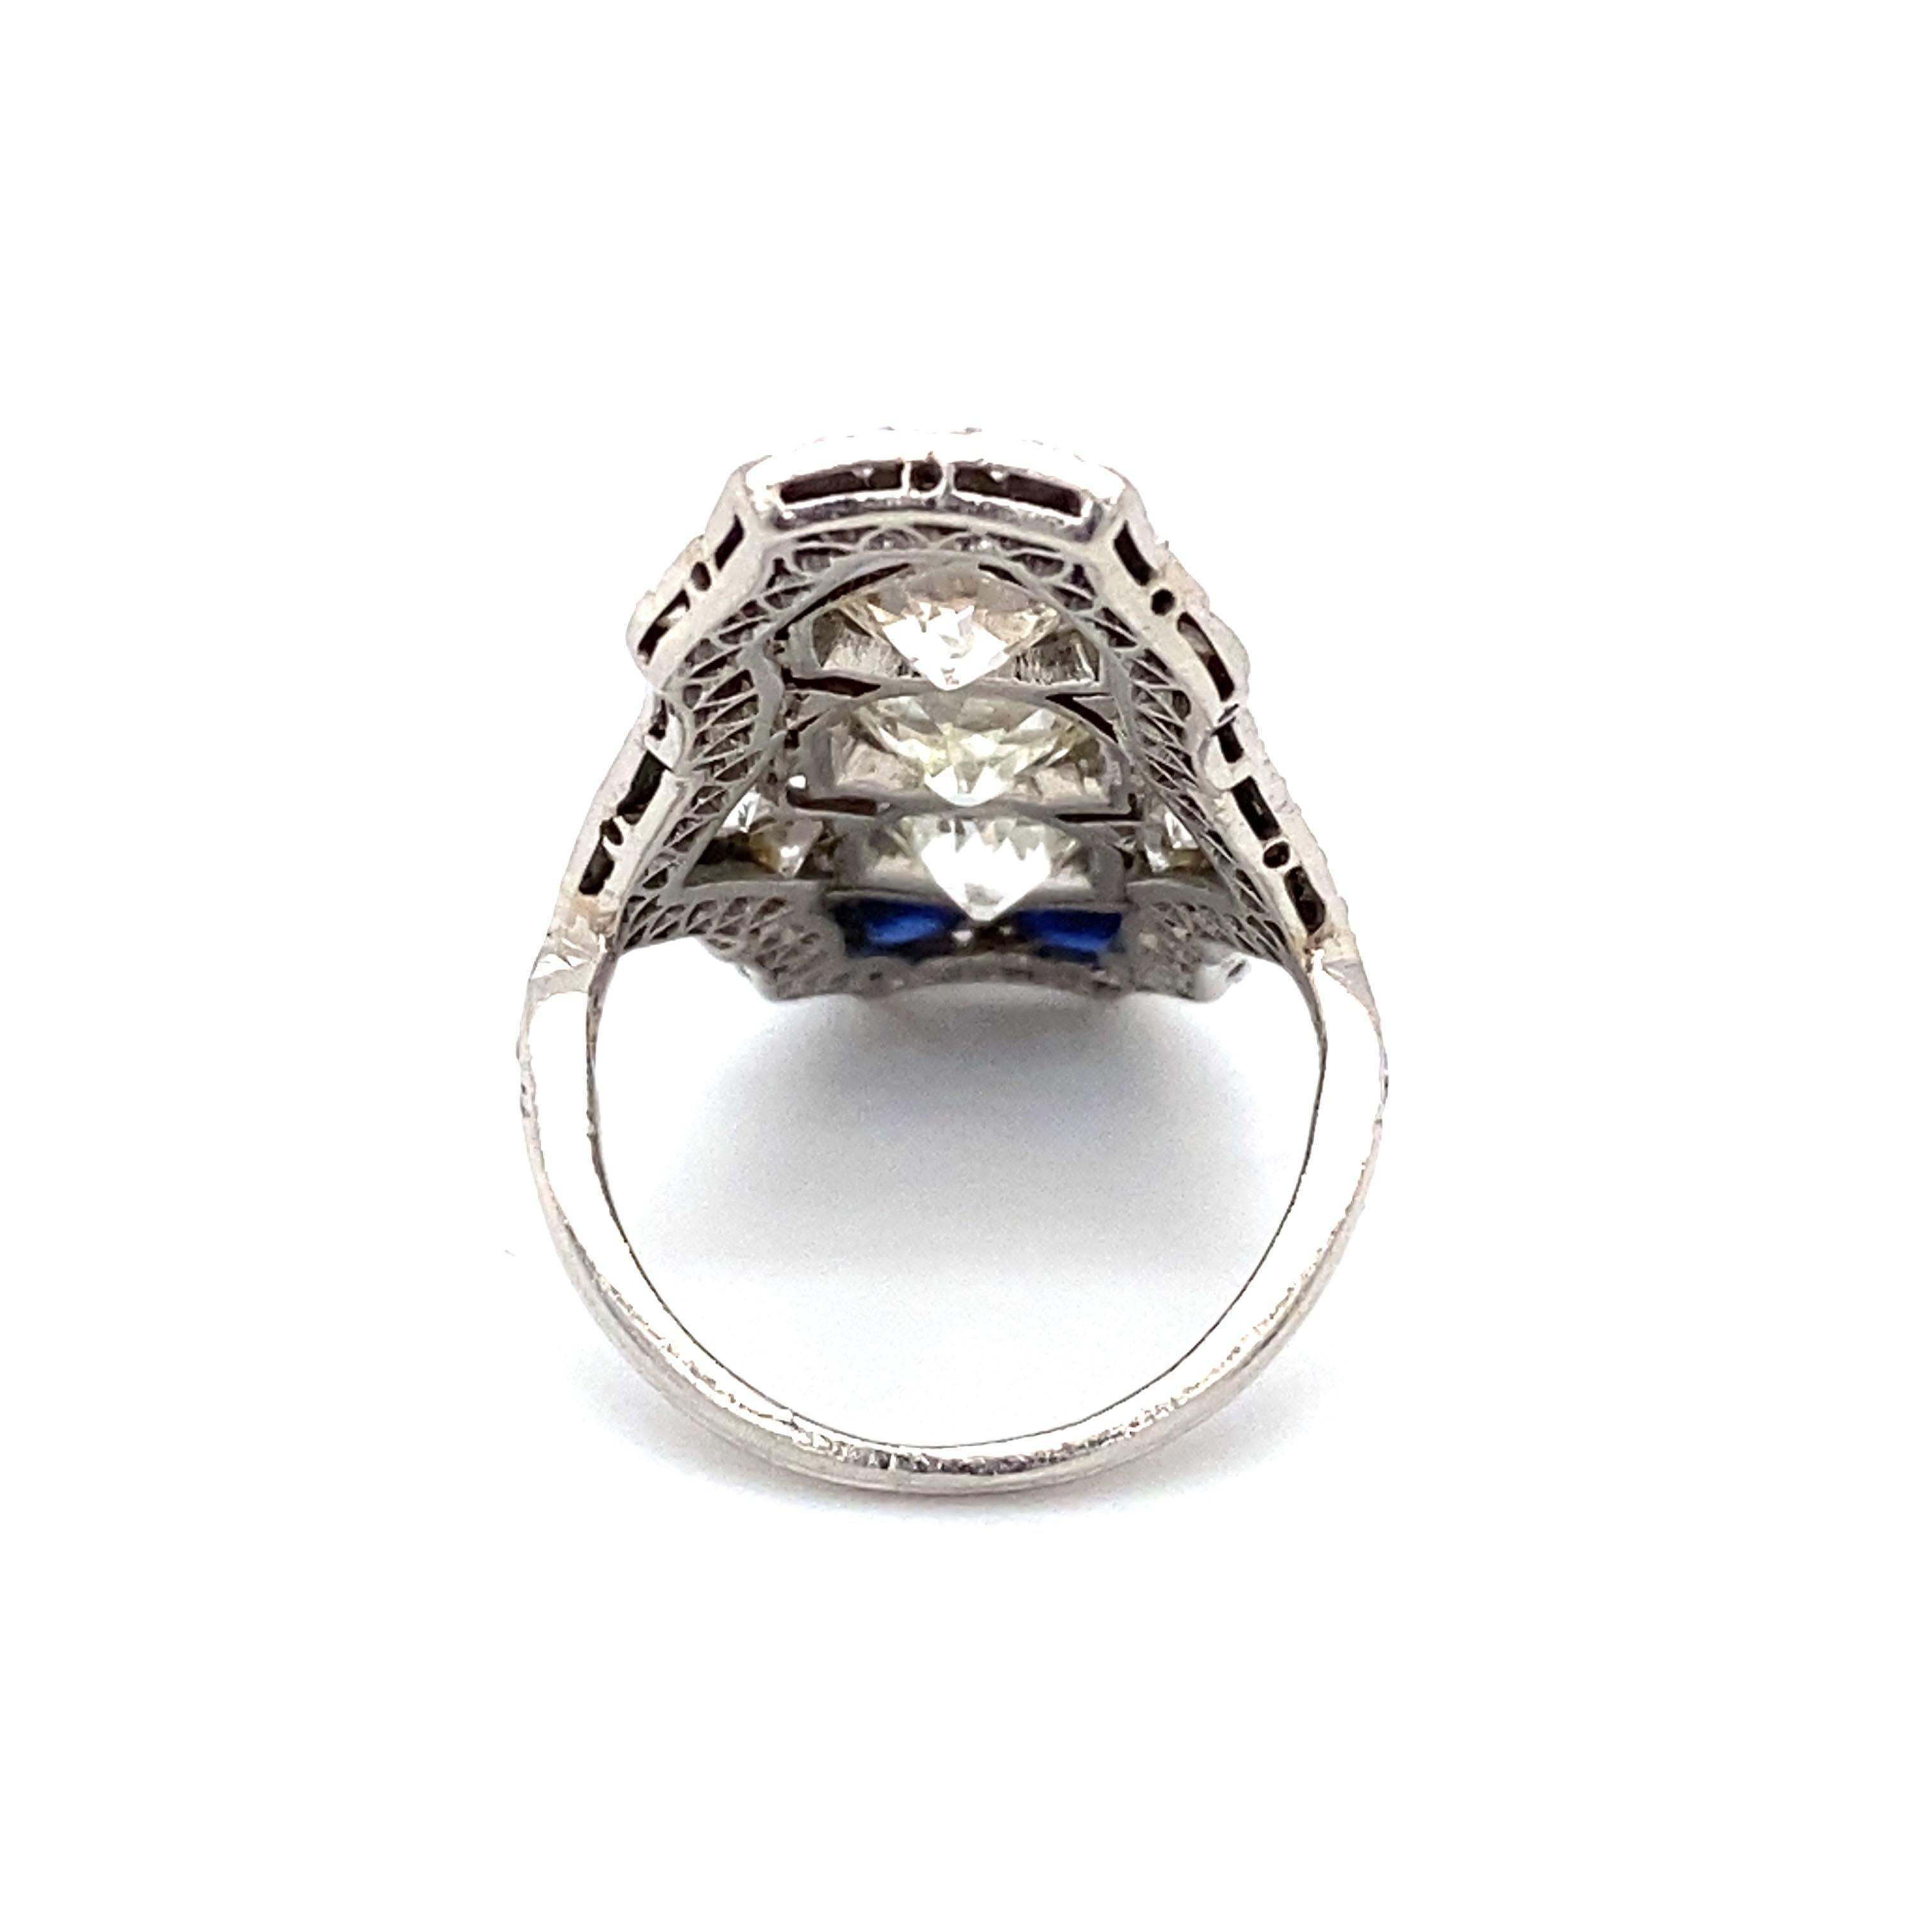 Old European Cut Circa 1920s Art Deco 5.5 Carat Diamond and Sapphire Shield Ring in Platinum